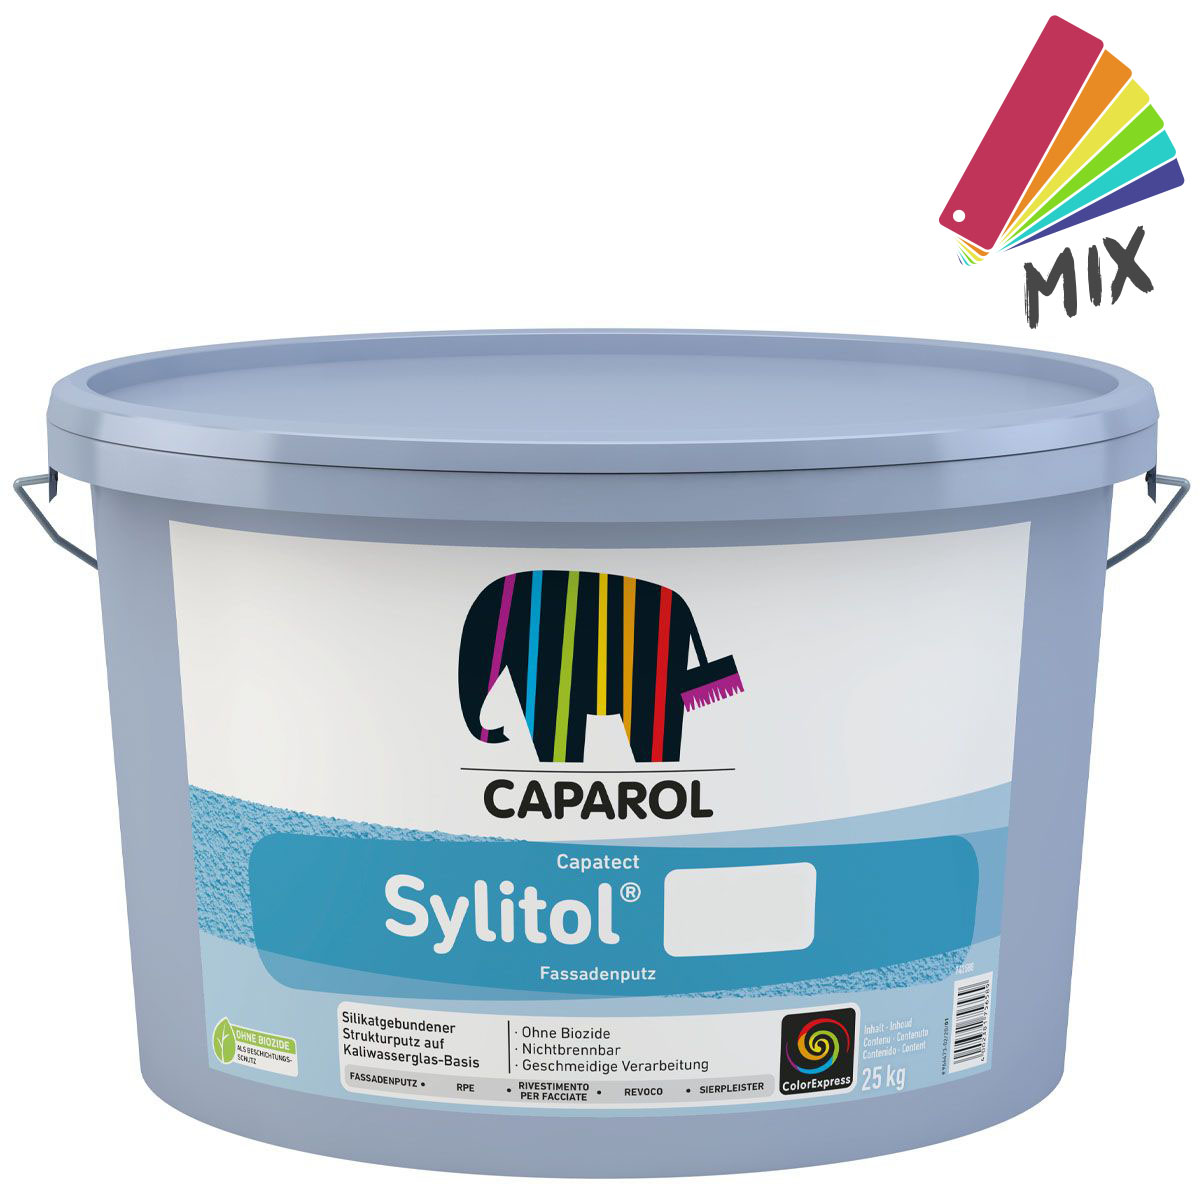 Caparol Capatect Sylitol Fassadenputz R30 (3mm) 25kg, MIX PG S